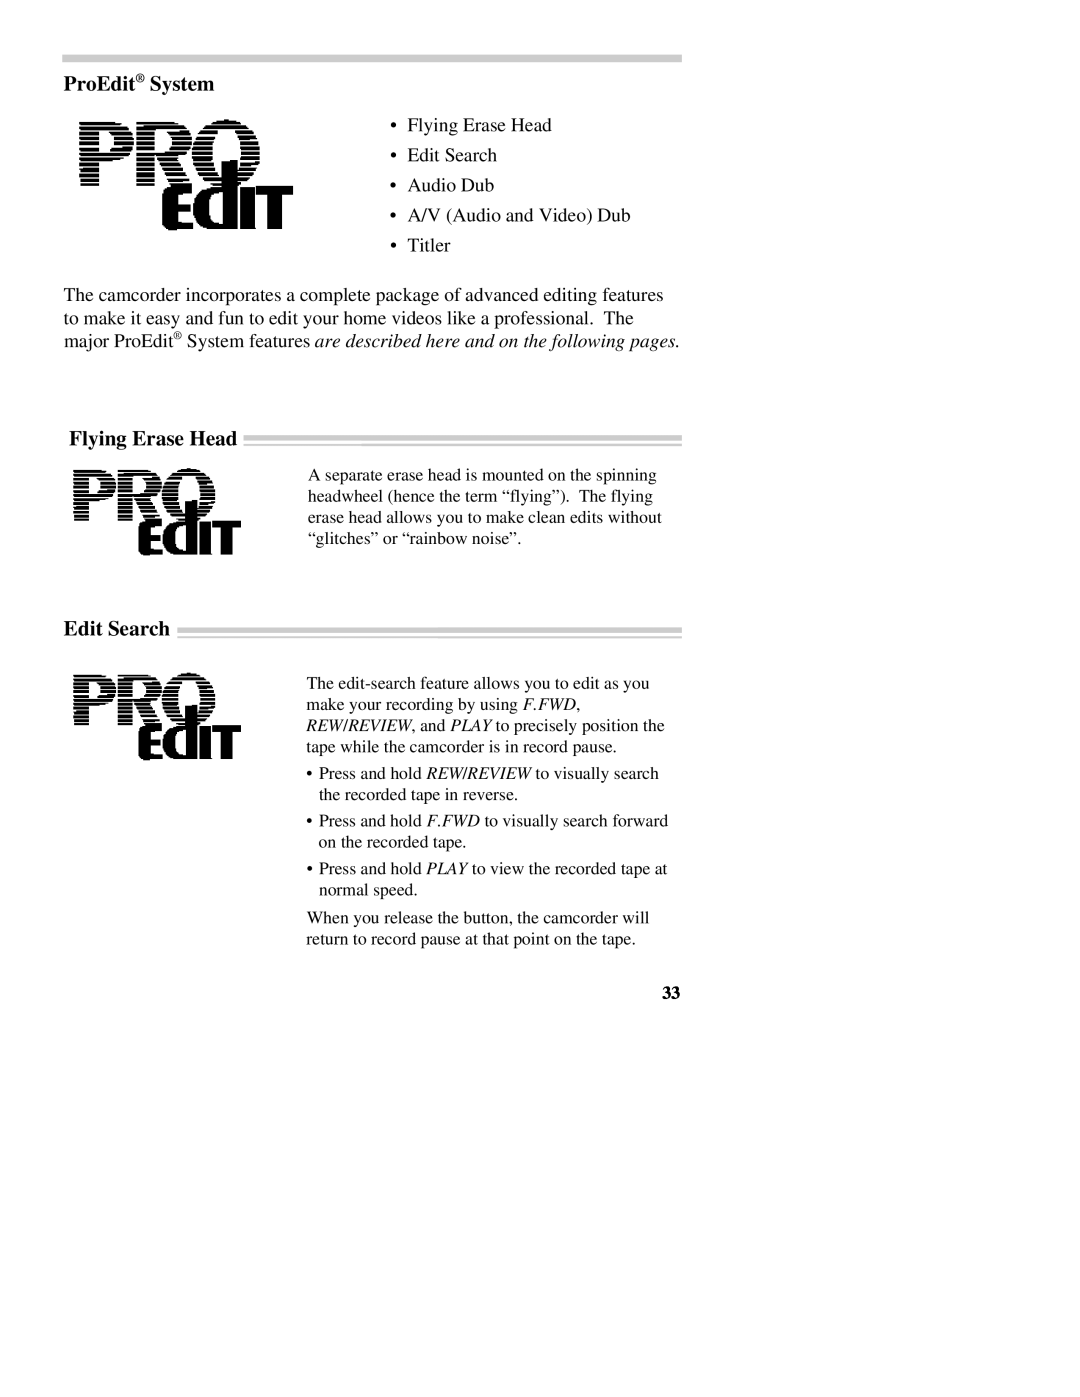 RCA CC437 manual ProEdit System, Flying Erase Head Edit Search Audio Dub A/V Audio and Video Dub, Titler 